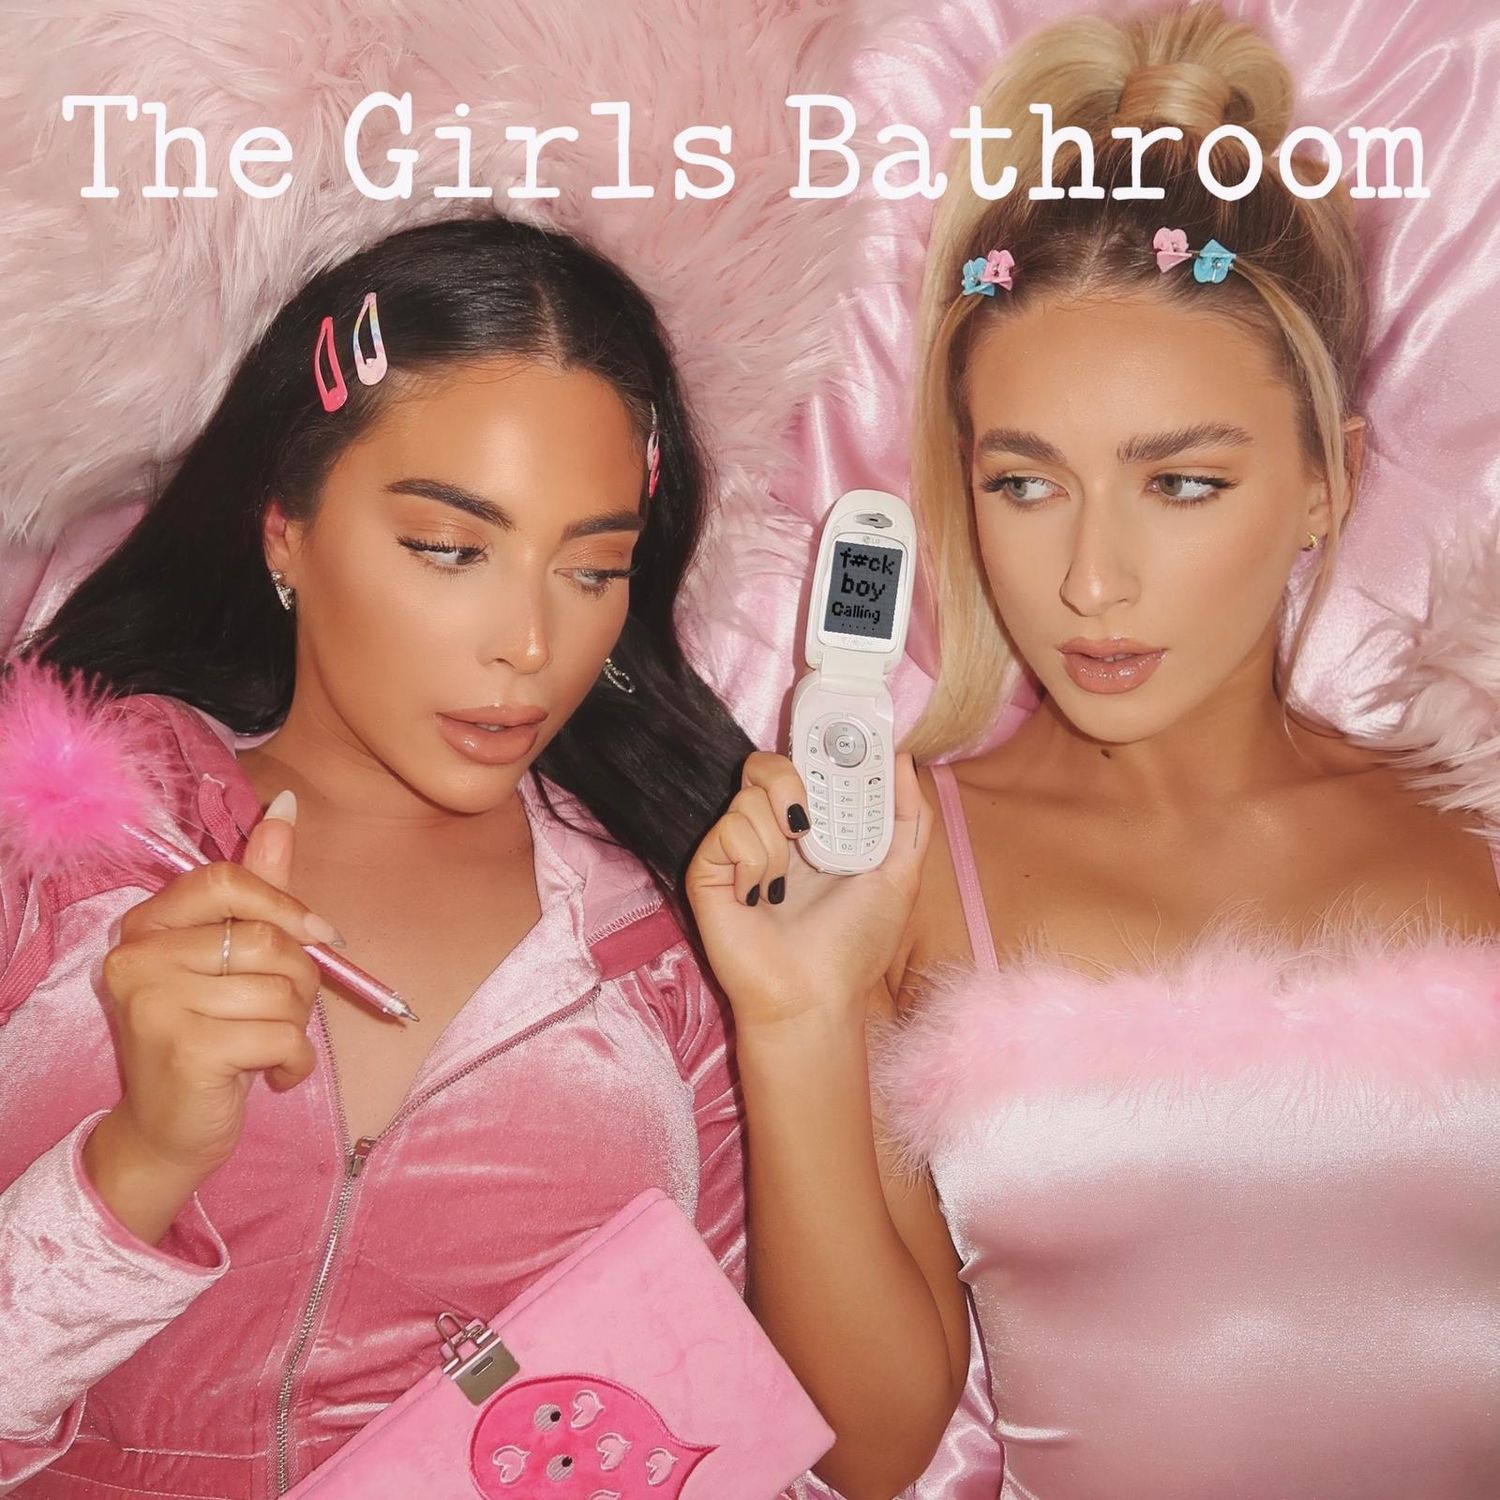 The Girls Bathroom Tickets